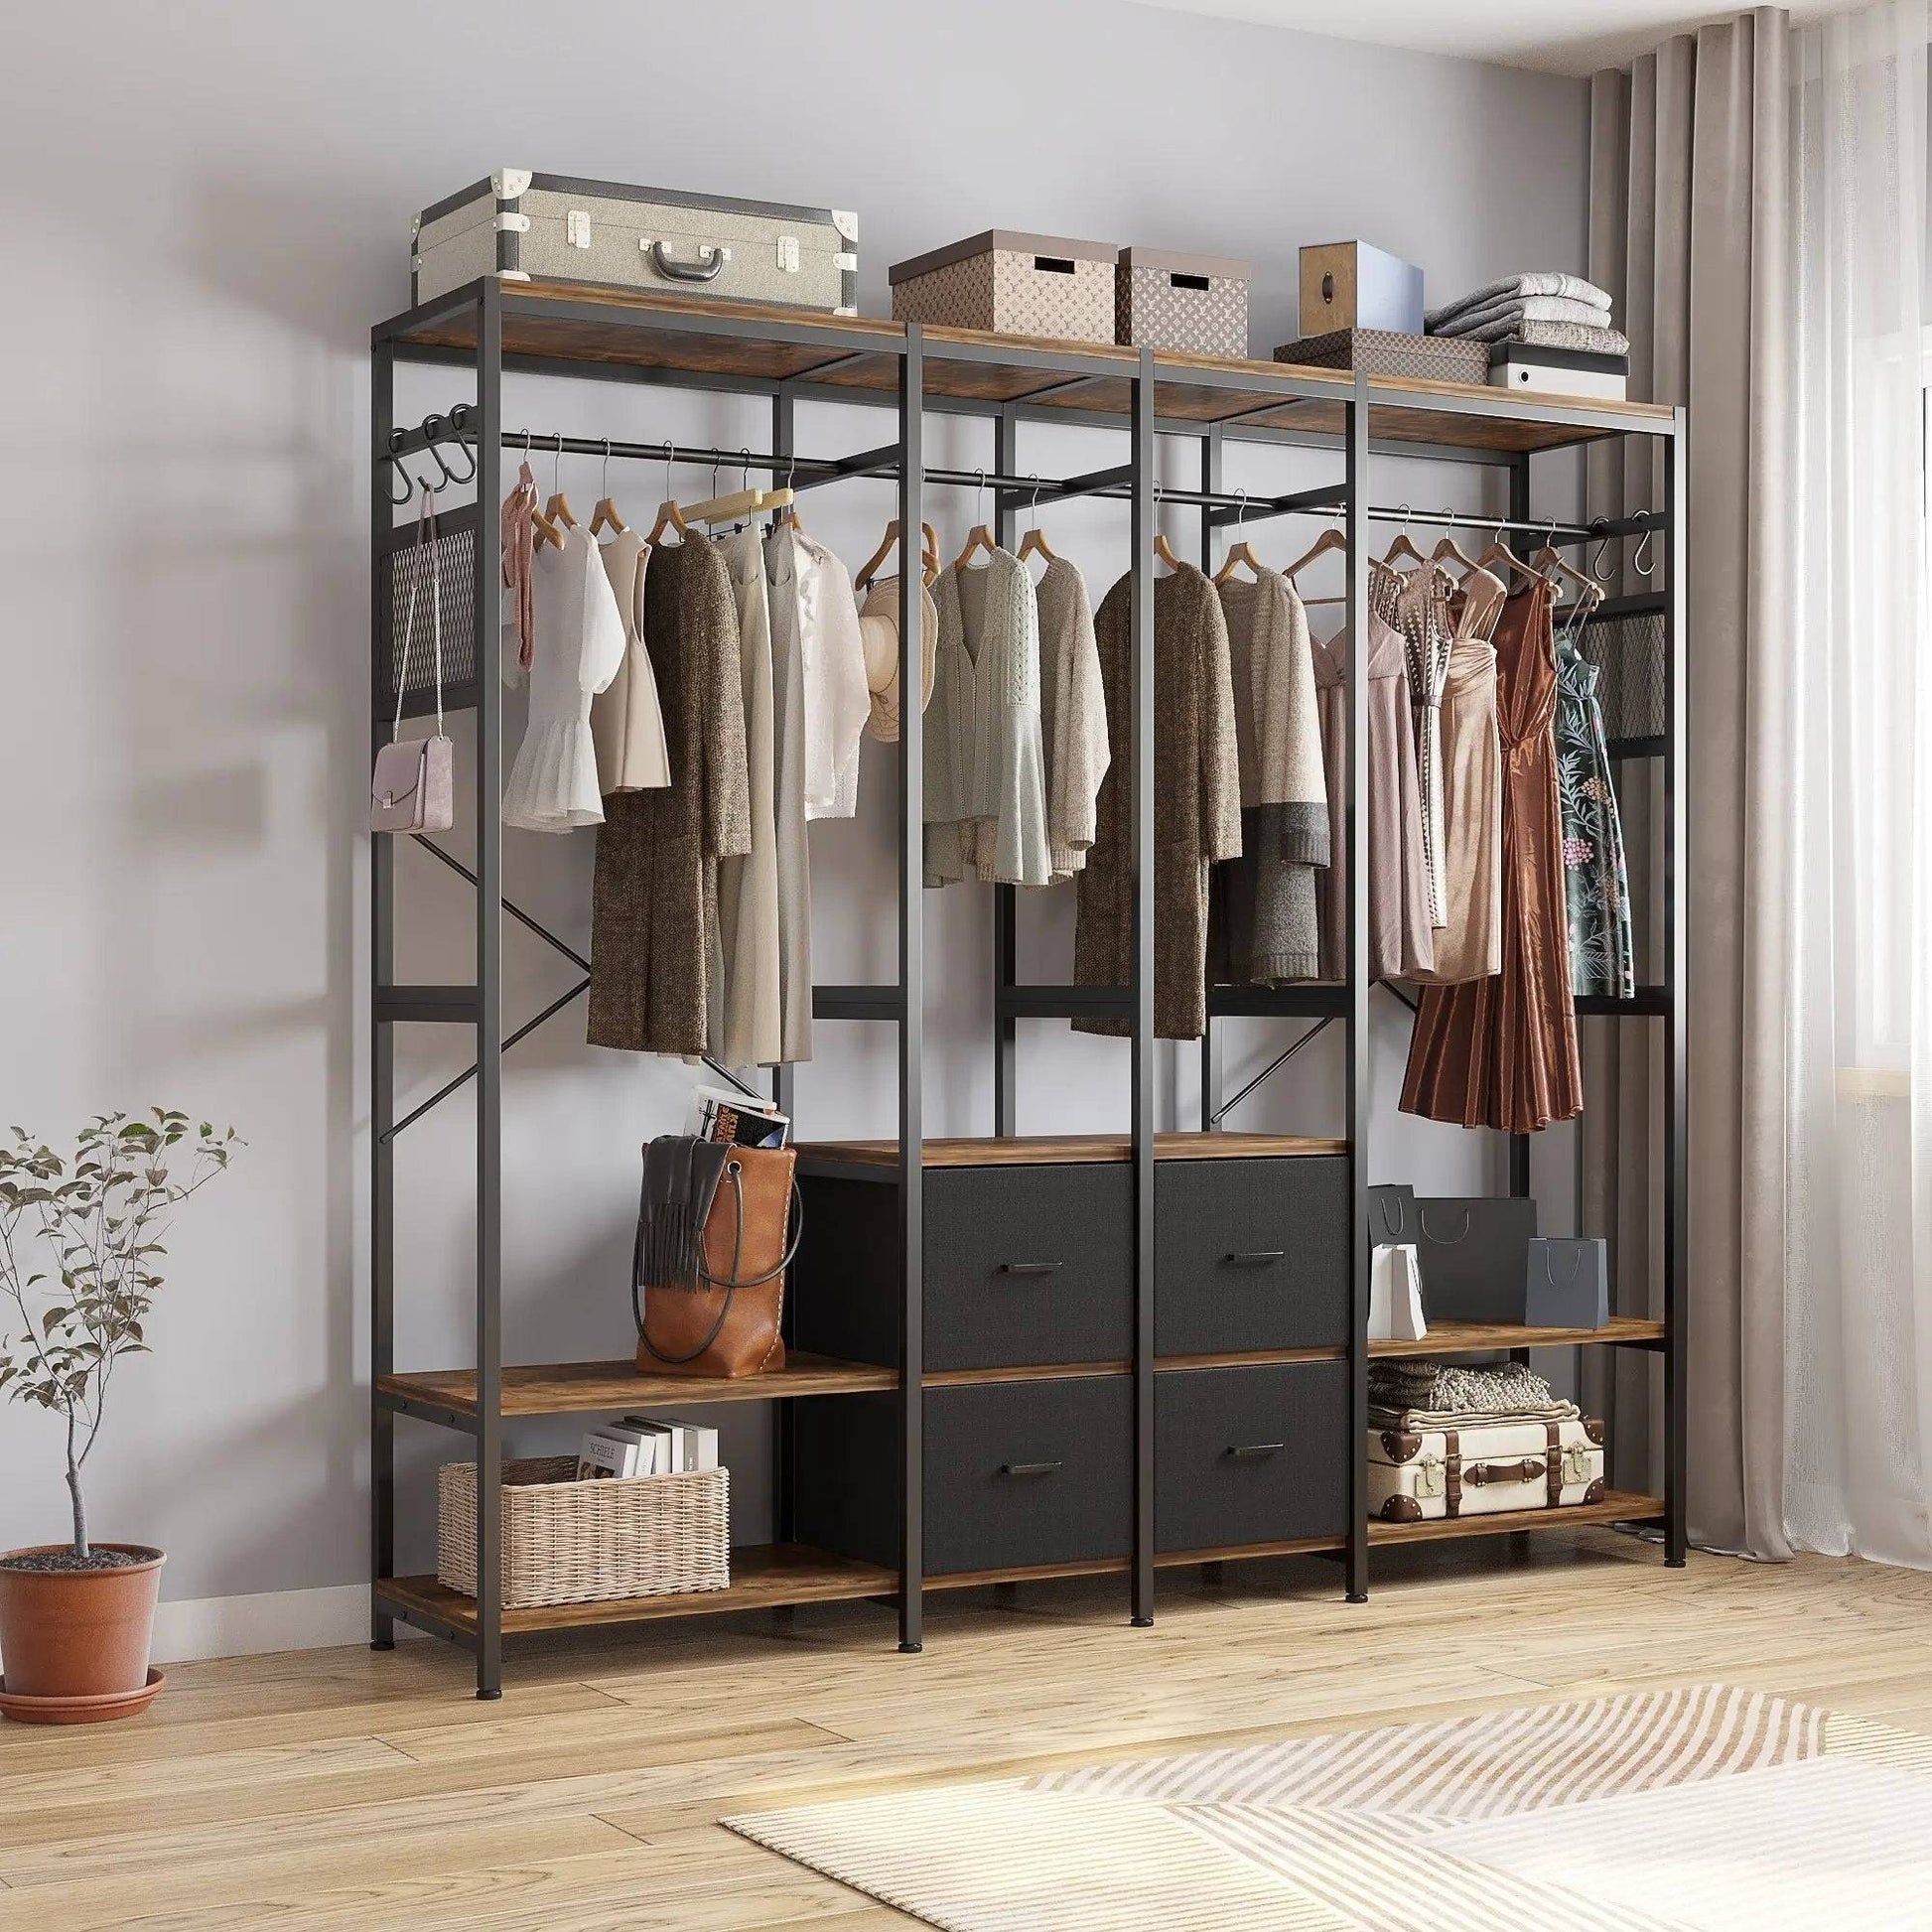 Independent wardrobe manager, clothes rack, multiple storage racks